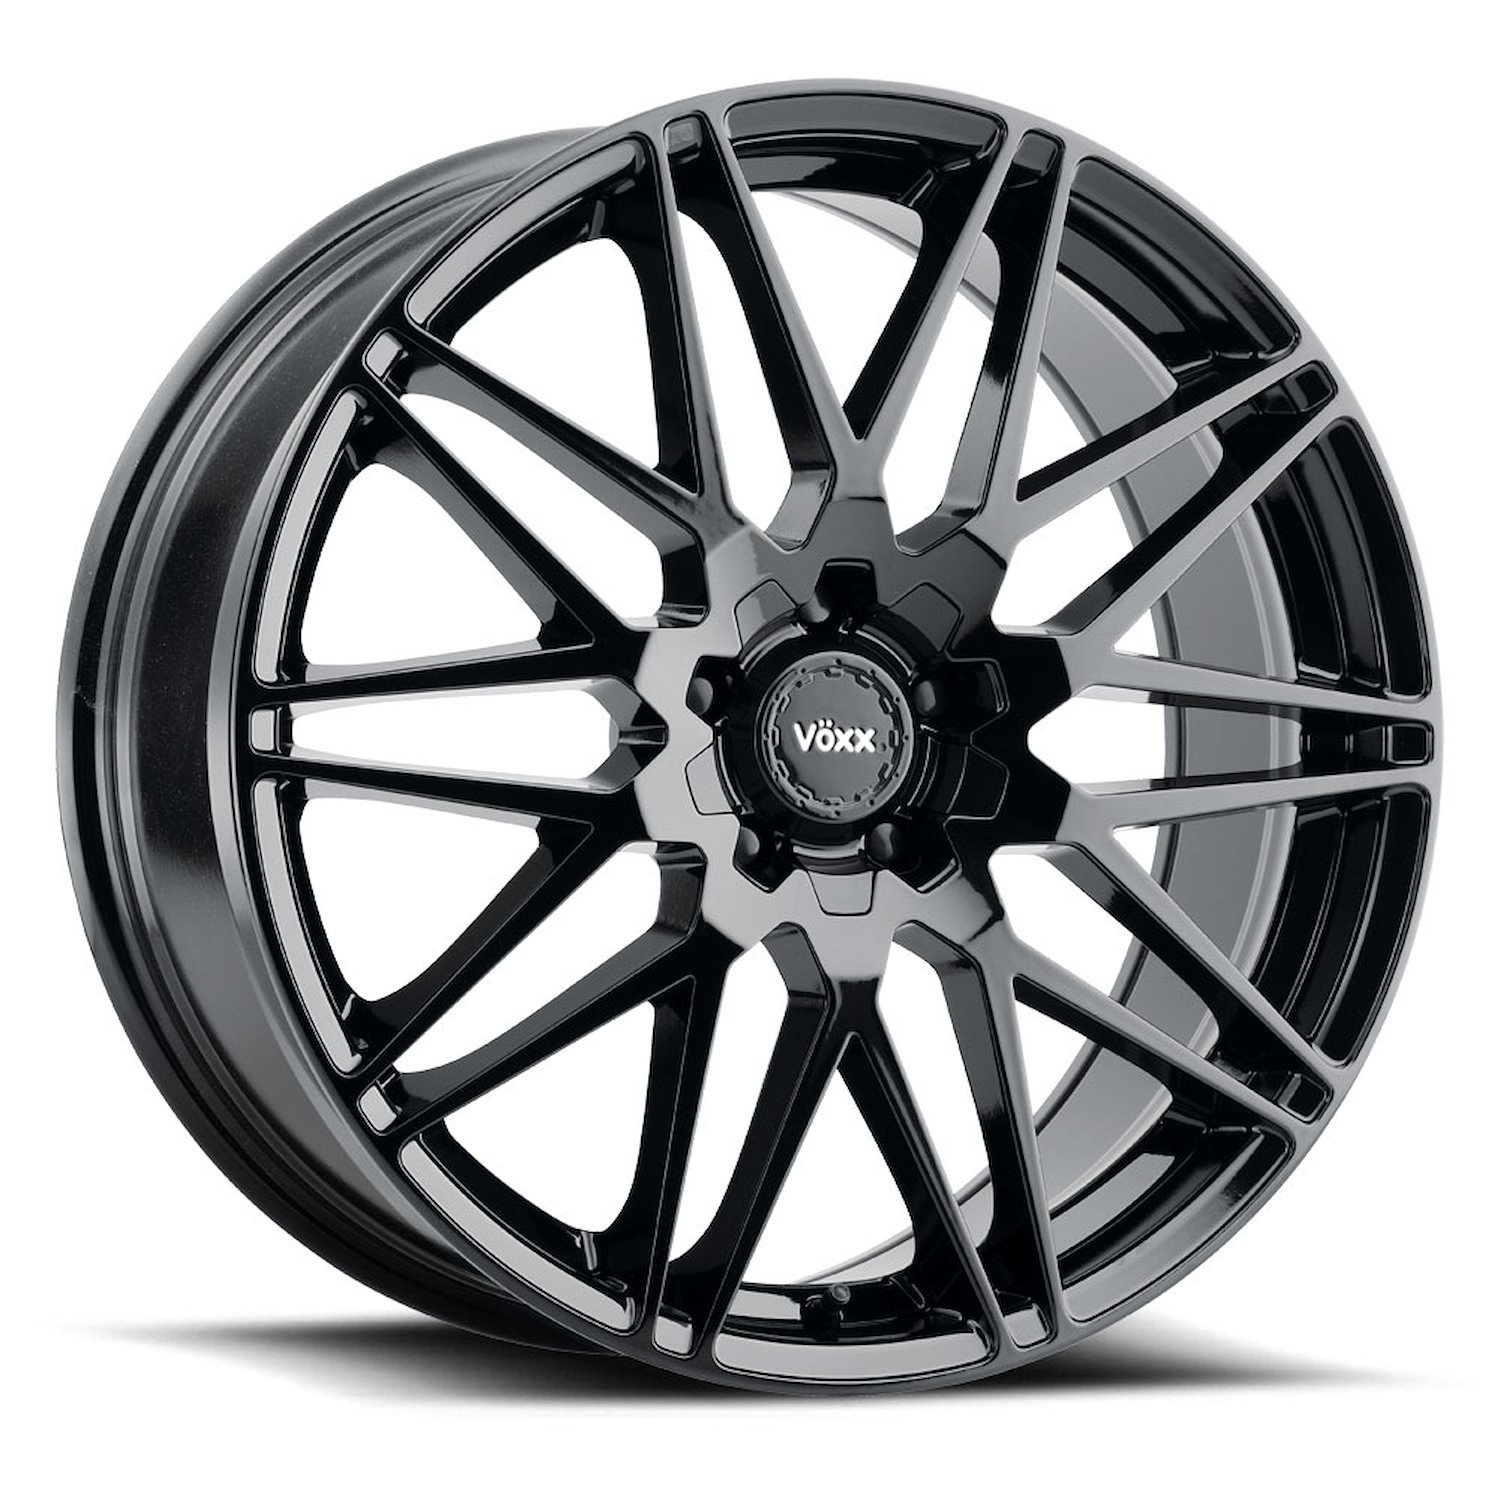 NCE 285-5003-32 GB Nice Wheel [Size: 20" x 8.50"] Finish: Gloss Black